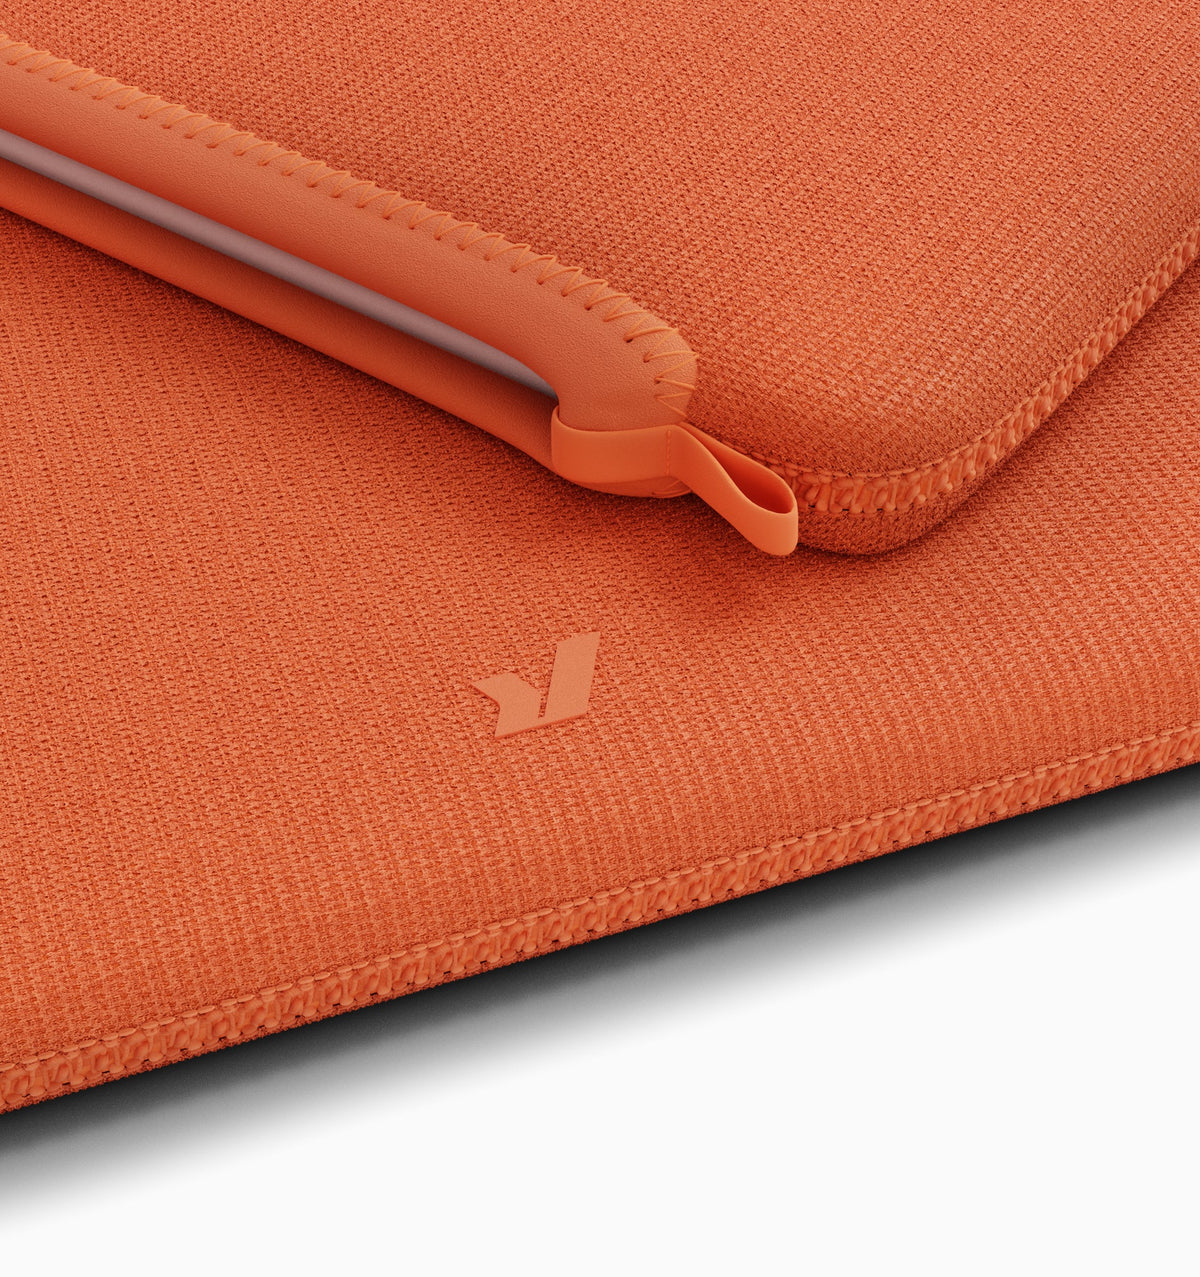 Rushfaster Laptop Sleeve For 13" MacBook Air - Orange